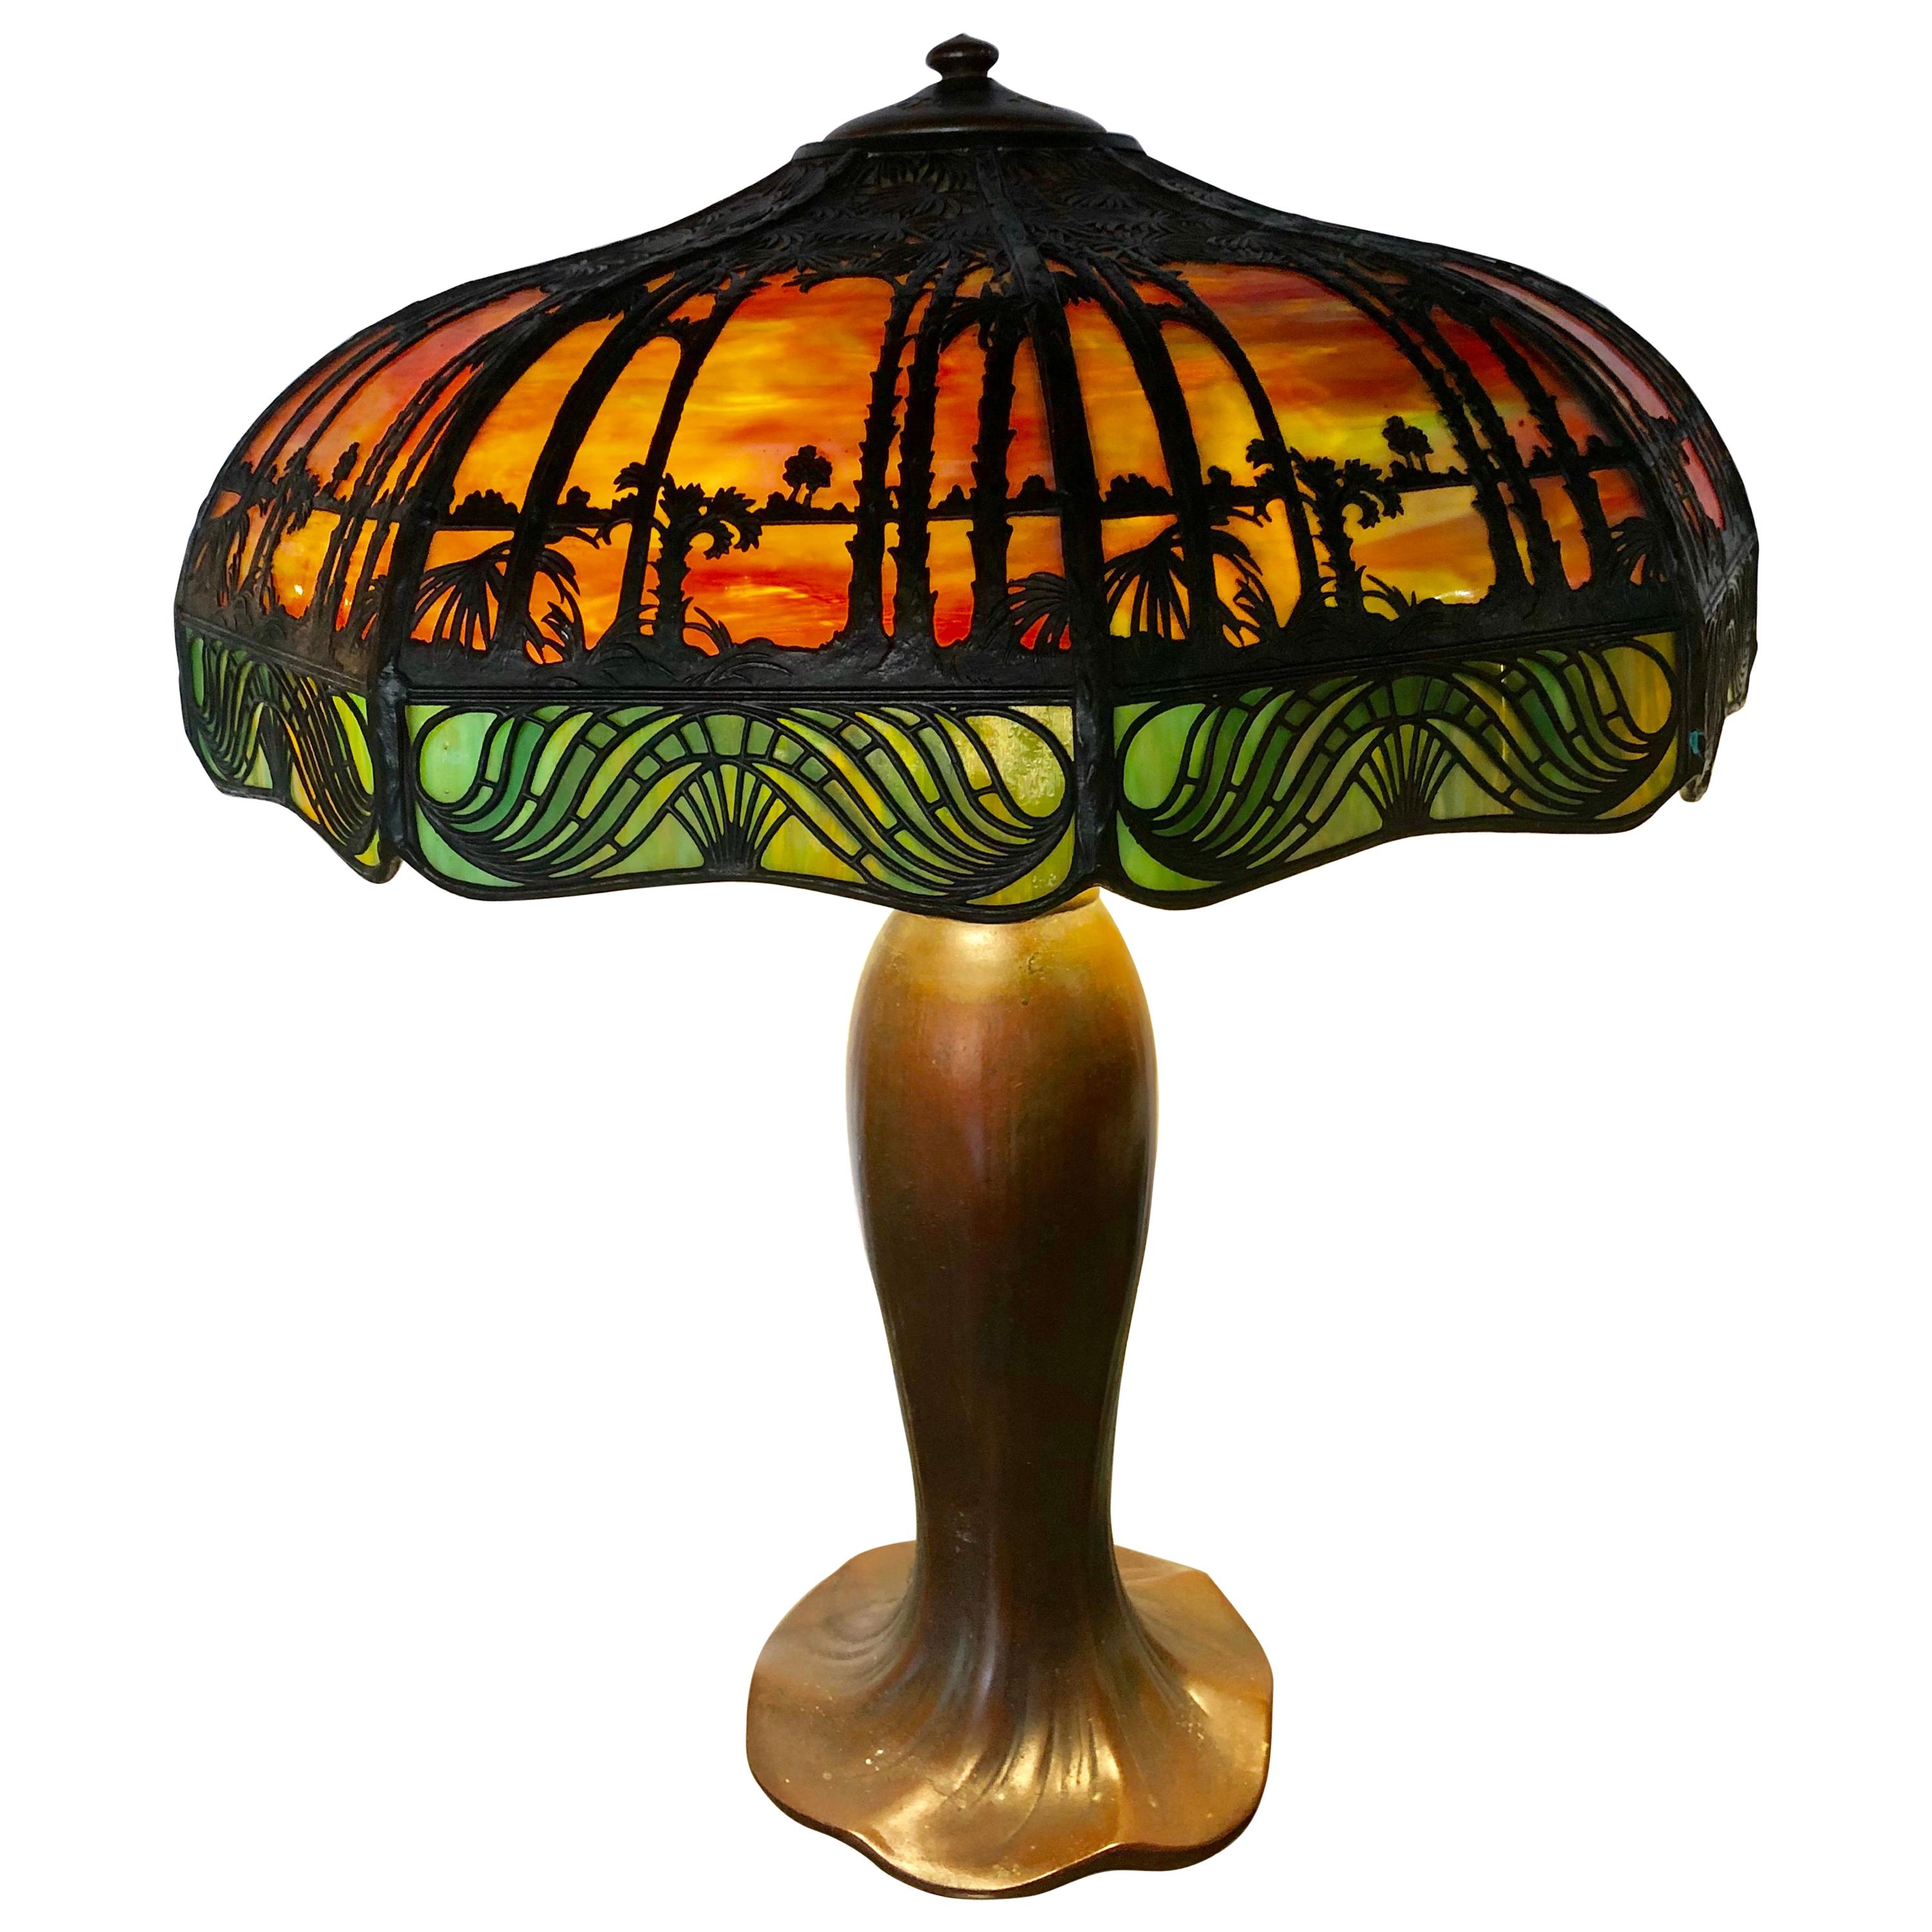 Handel Style Lamp